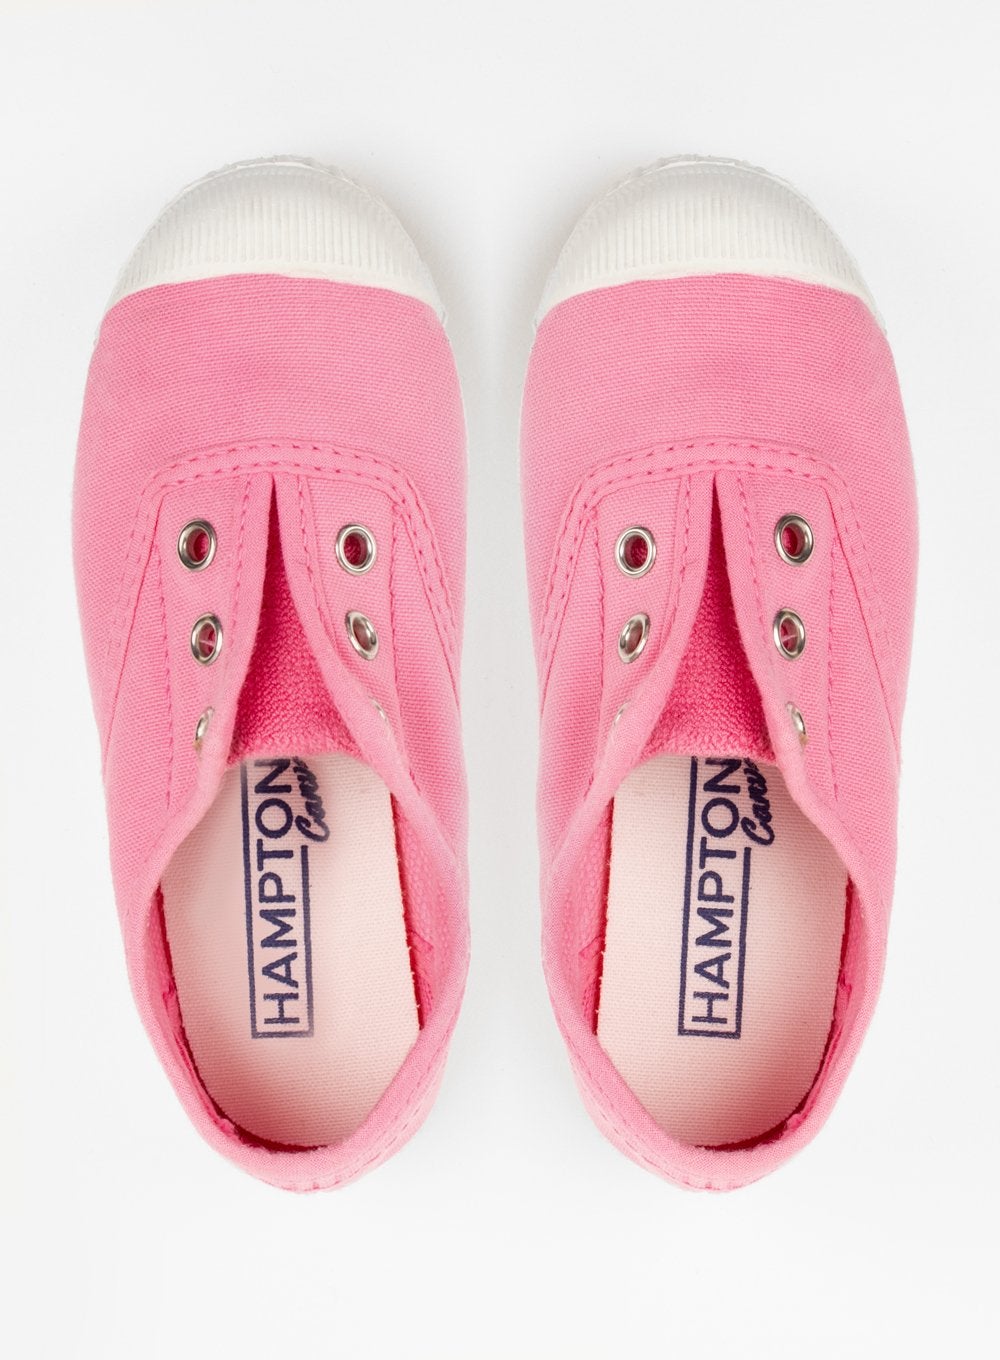 Hampton Canvas Canvas Shoes Hampton Canvas Plum Plimsolls in Bonbon Pink - Trotters Childrenswear